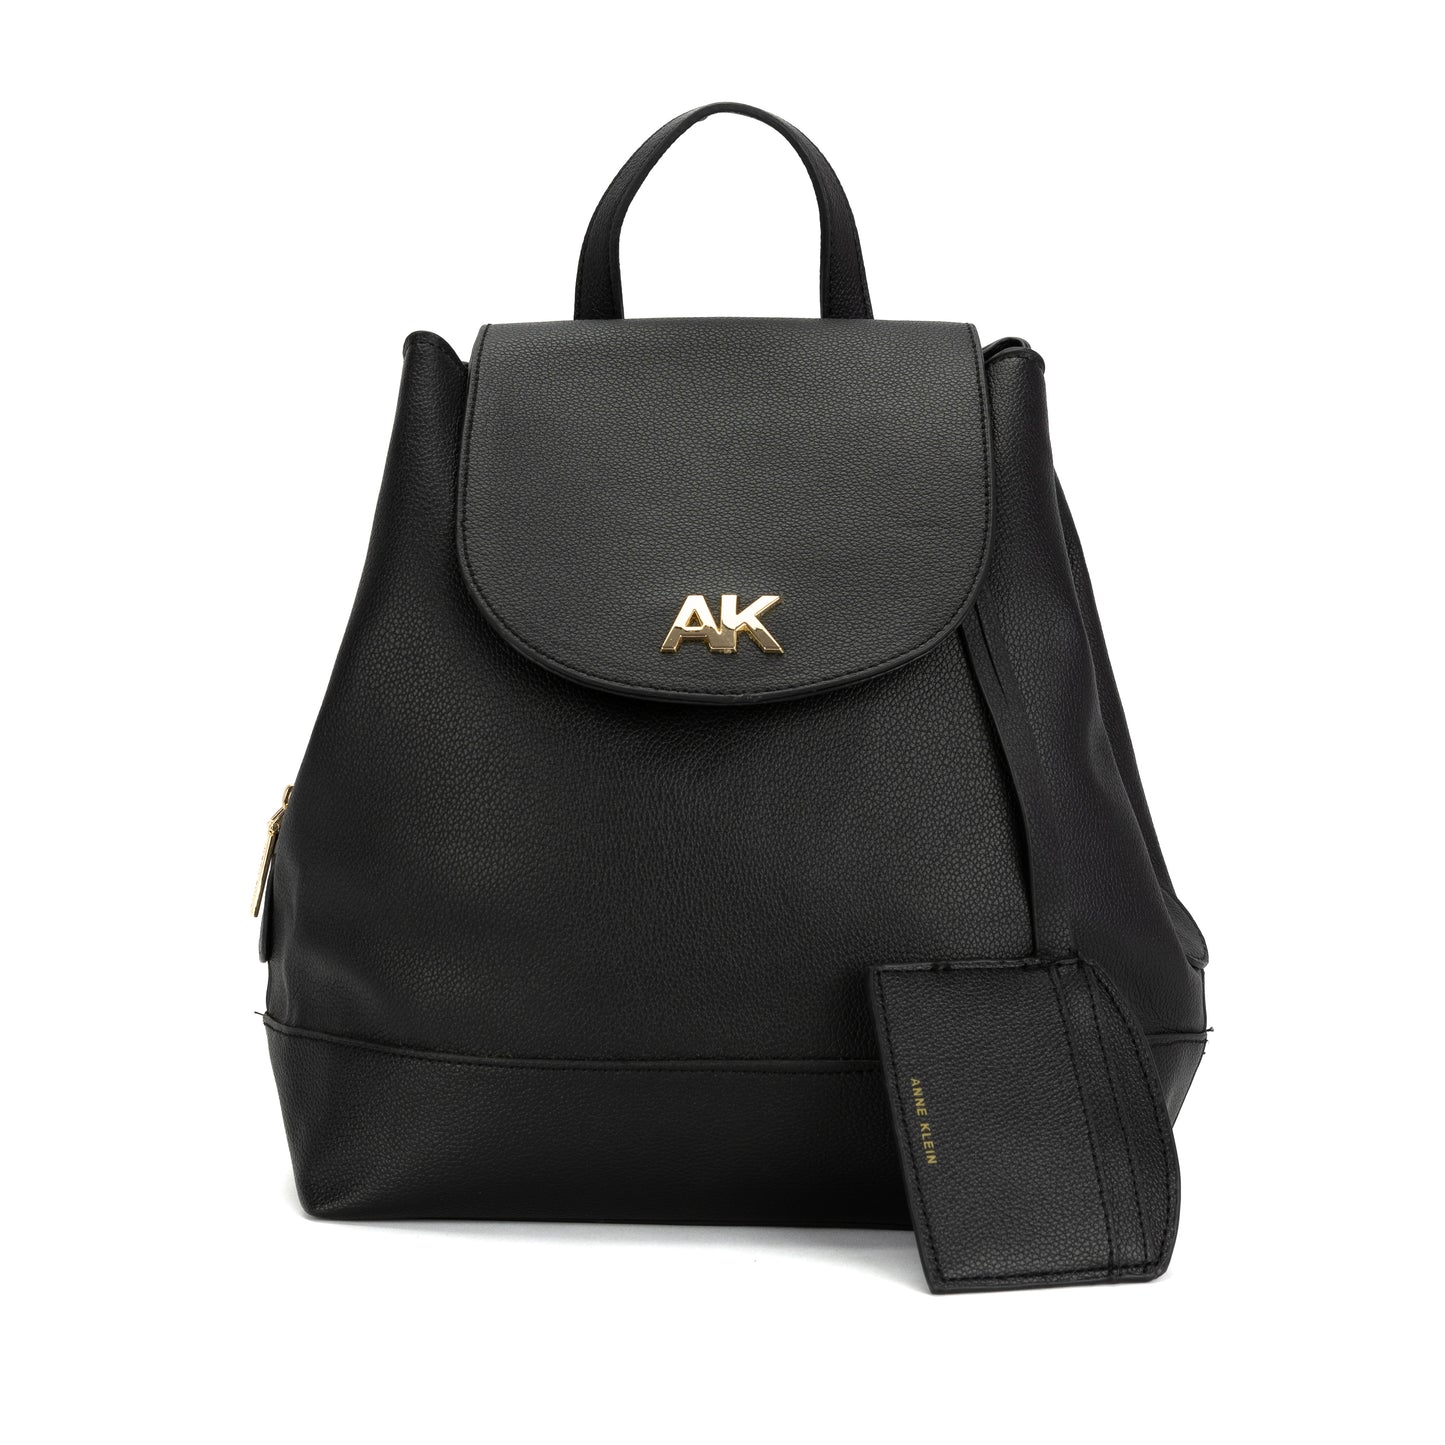 Anne Klein Medium Backpack - Black